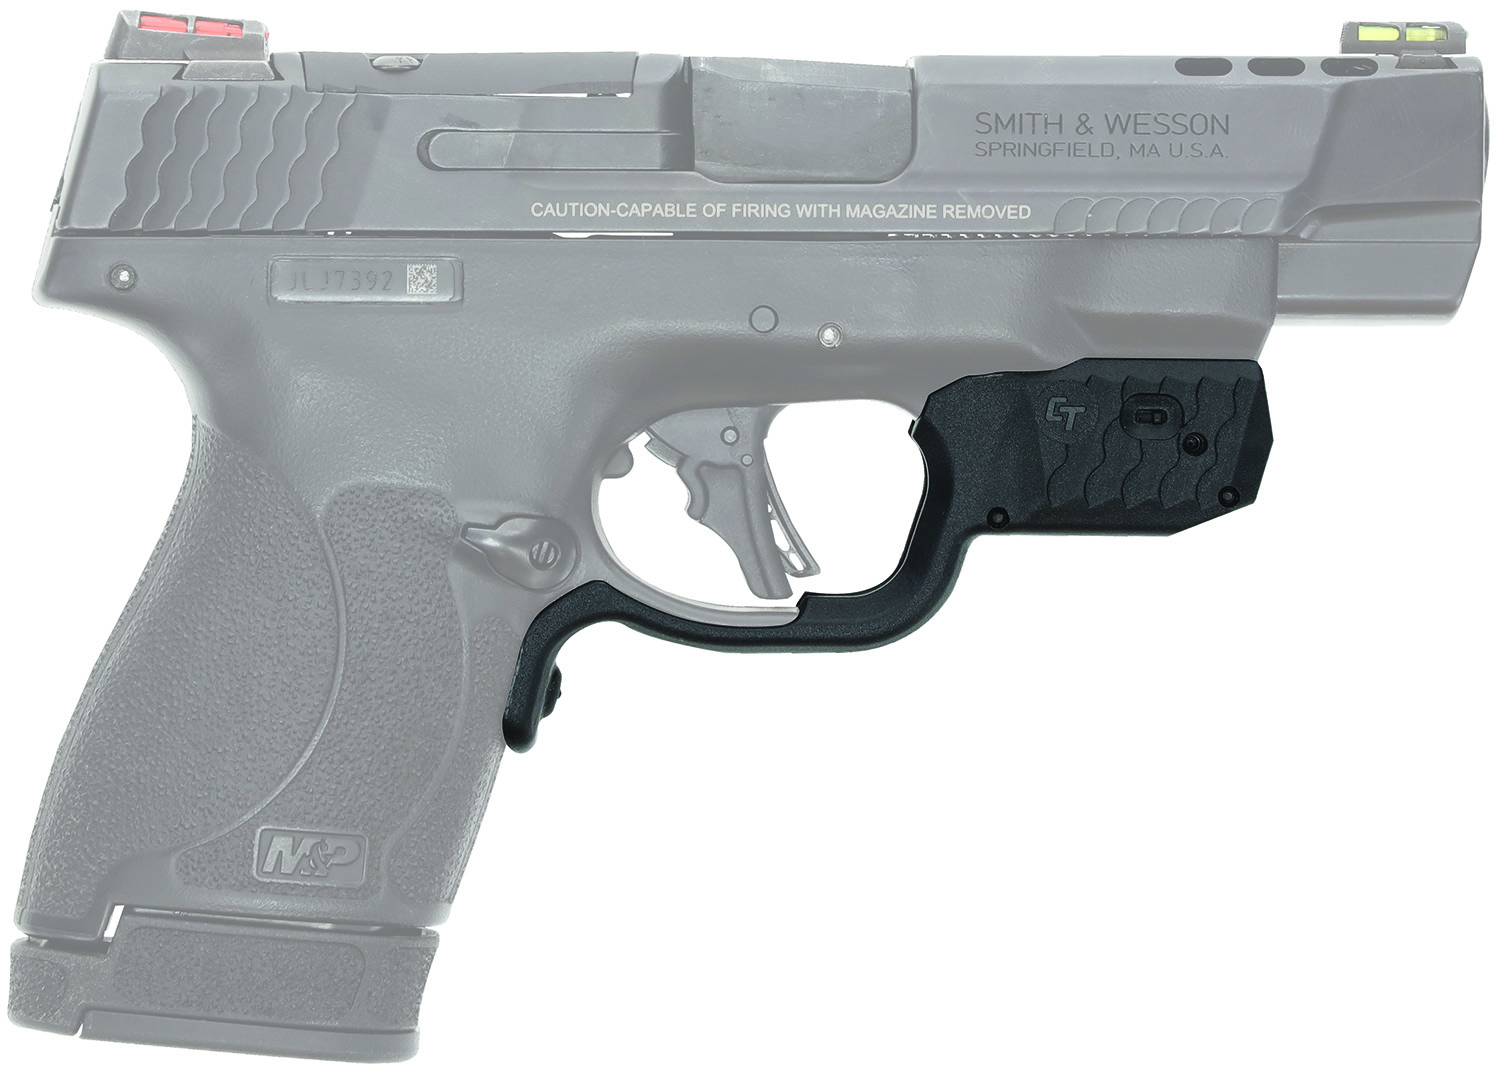 Crimson Trace 013000052 Laserguard  Black Red Laser Fits S&W Shield Plus Handgun Trigger Guard Mount